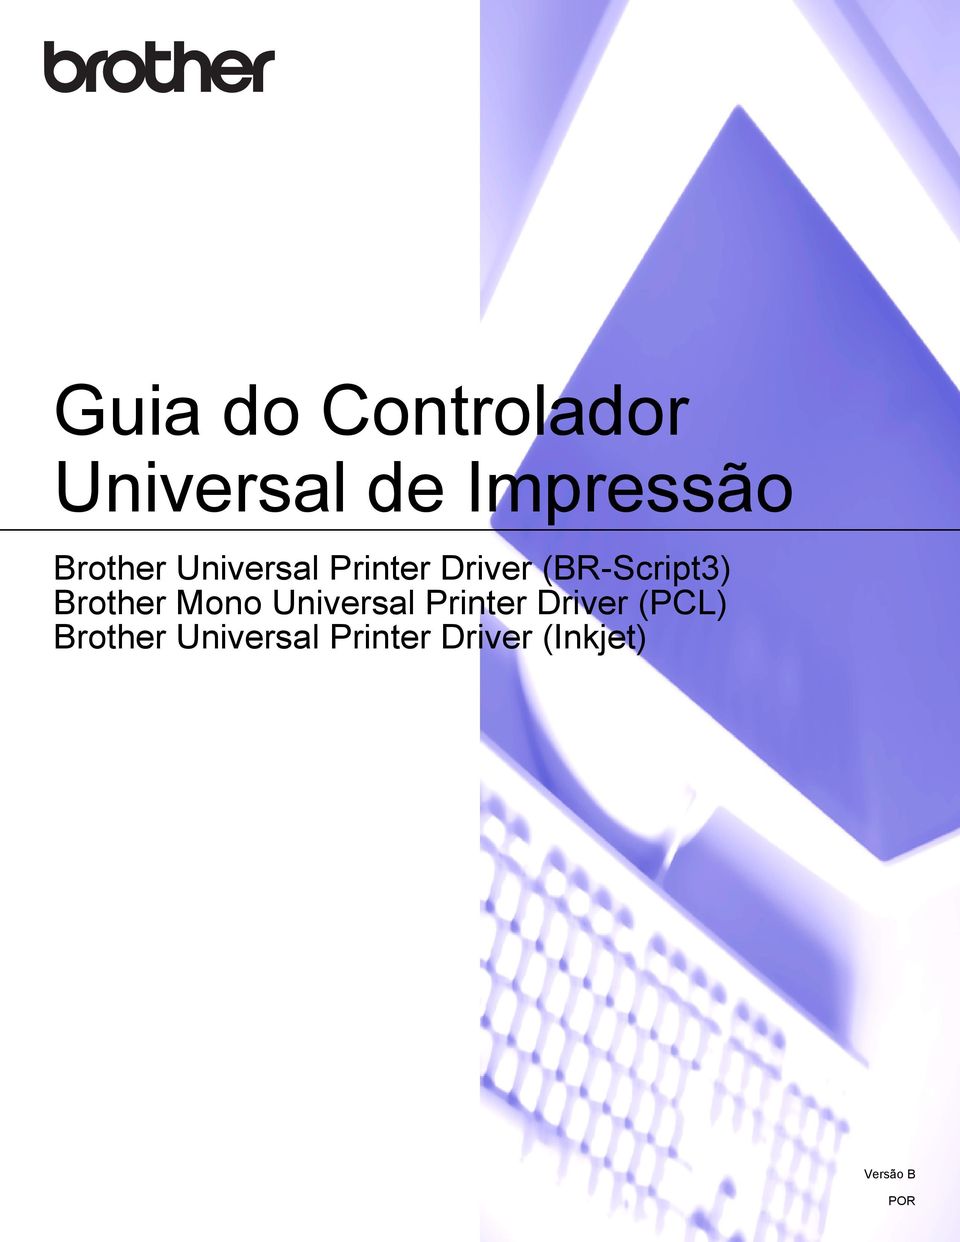 Brother Mono Universal Printer Driver (PCL)